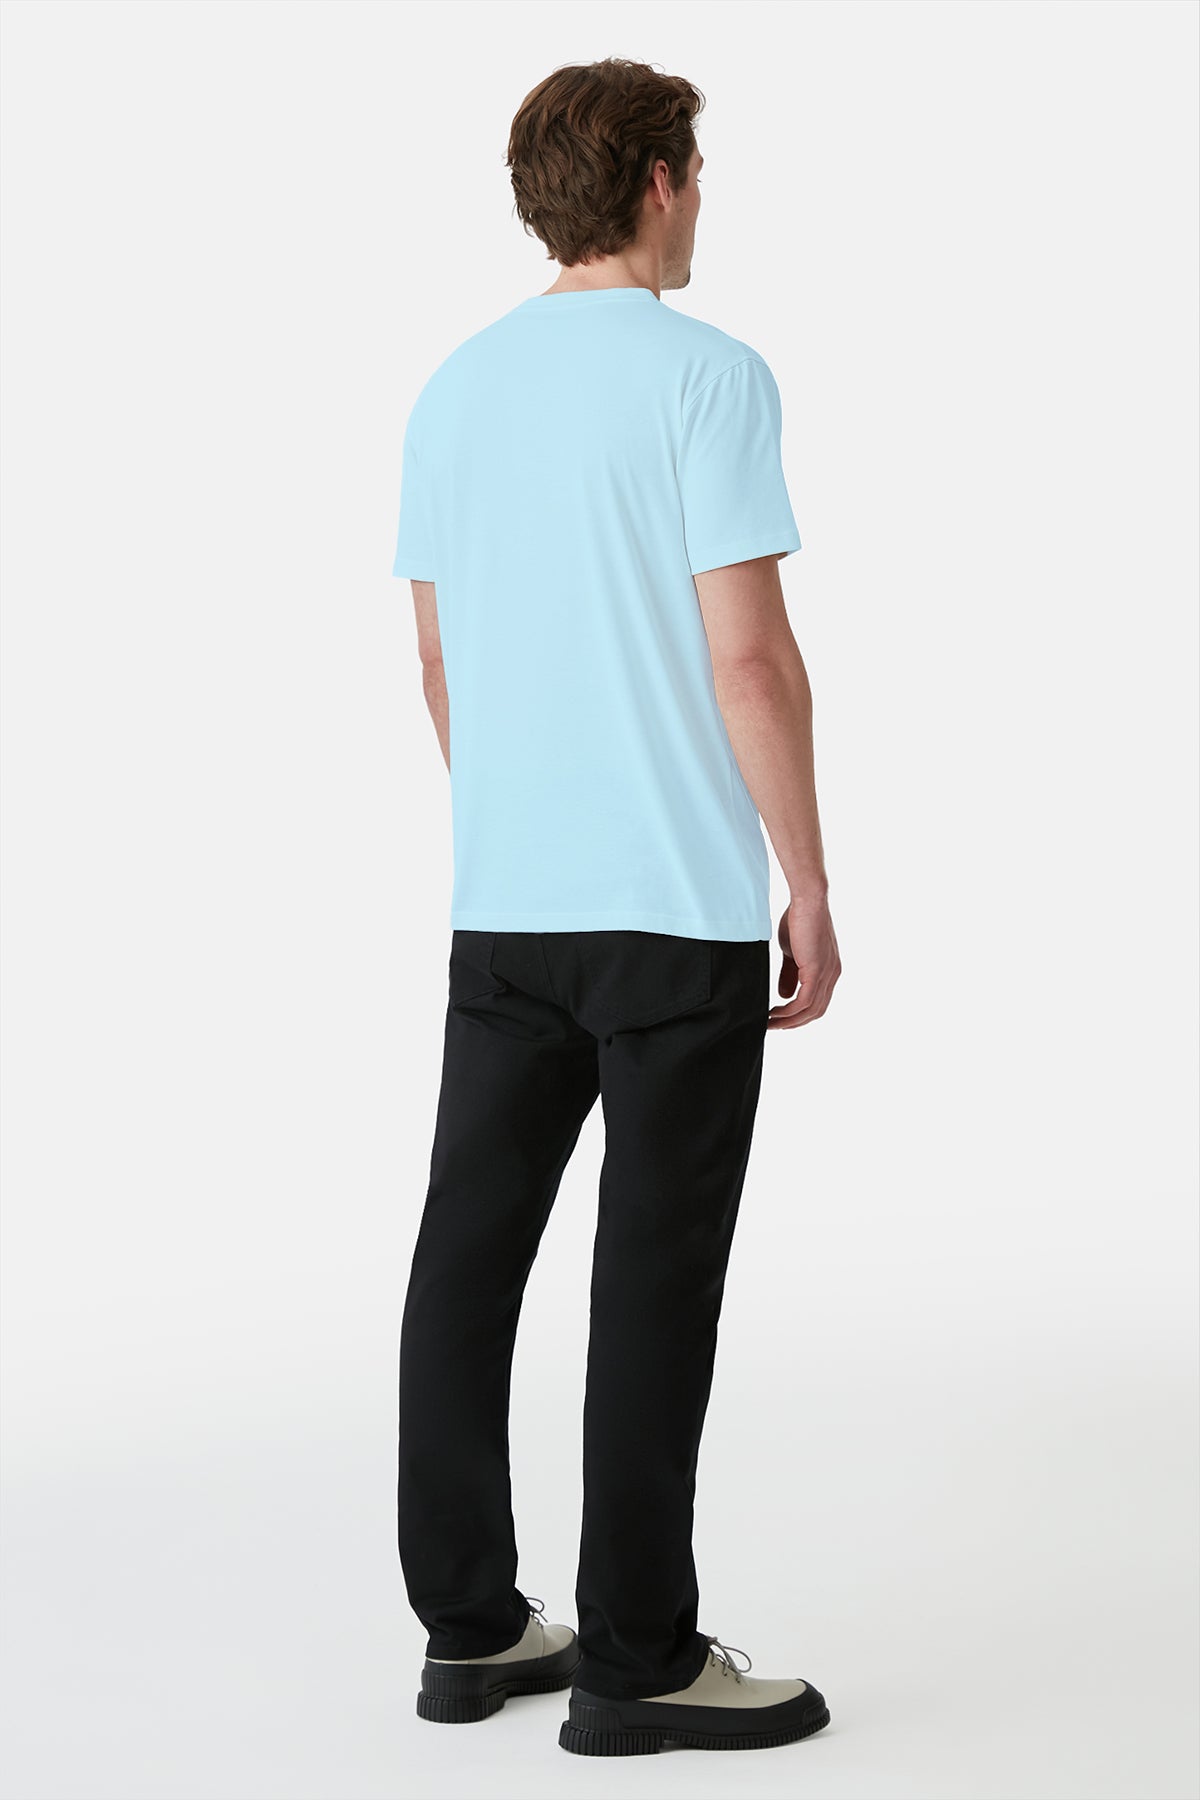 Yavru İmparator Penguen Light-Weight T-shirt - Mint Mavi